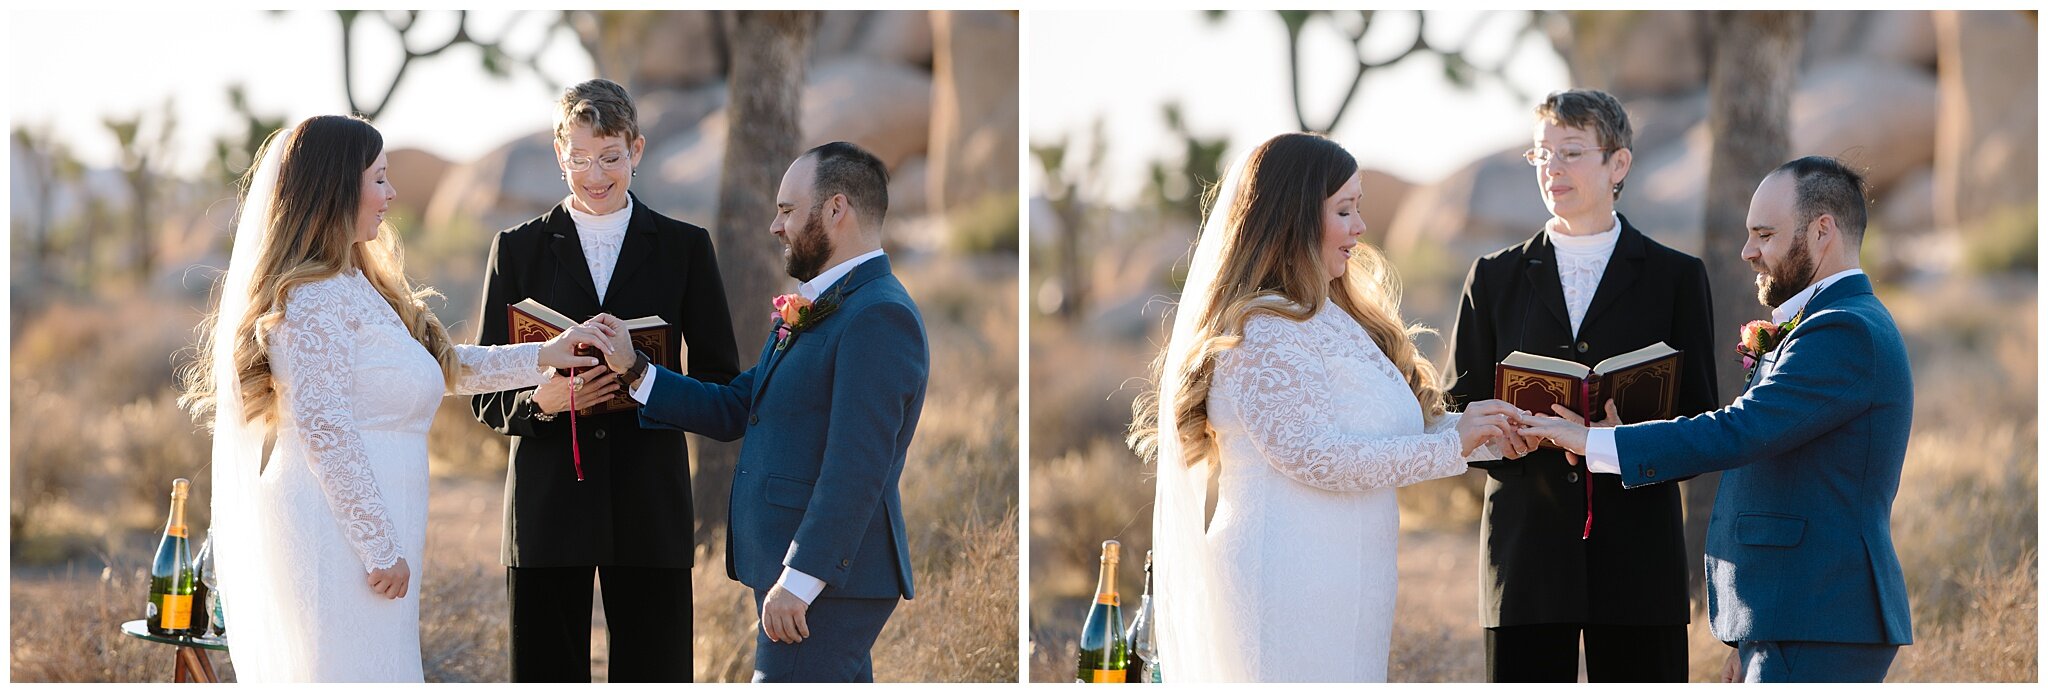 Joshua Tree Elopement - Michelle and Michael - Adventure Wedding Photographer_0044.jpg